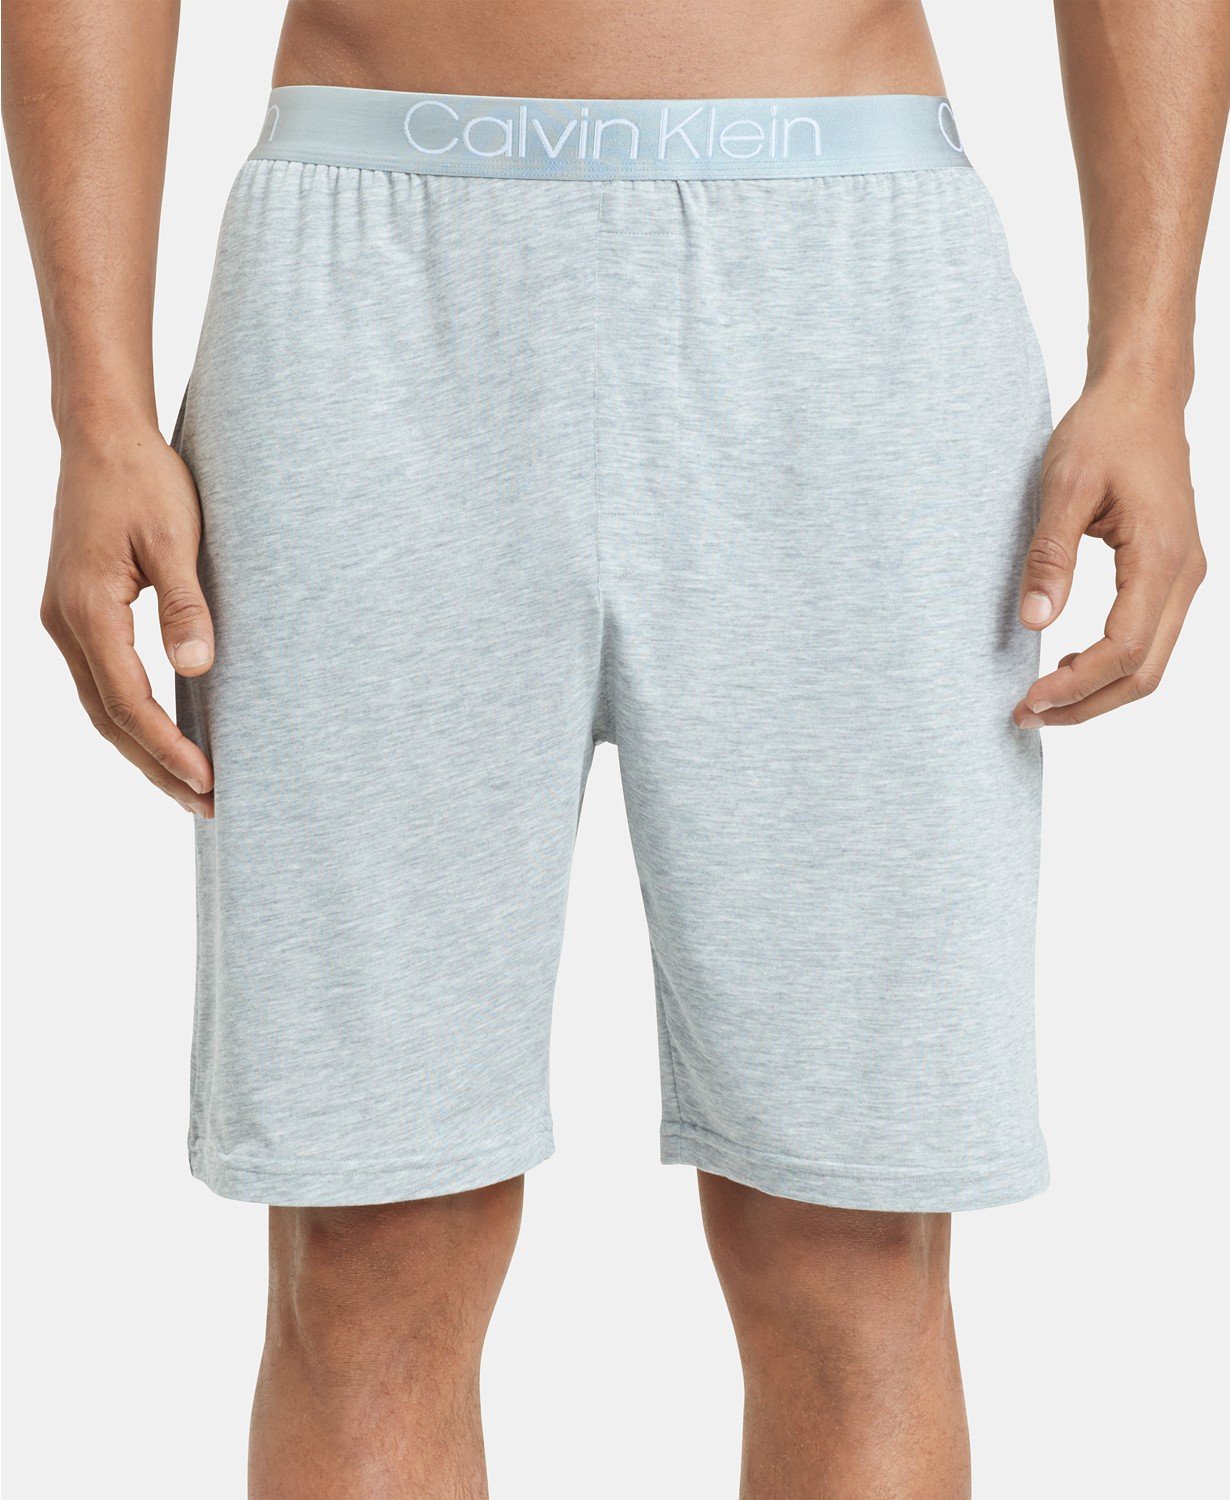 calvin klein pajamas shorts